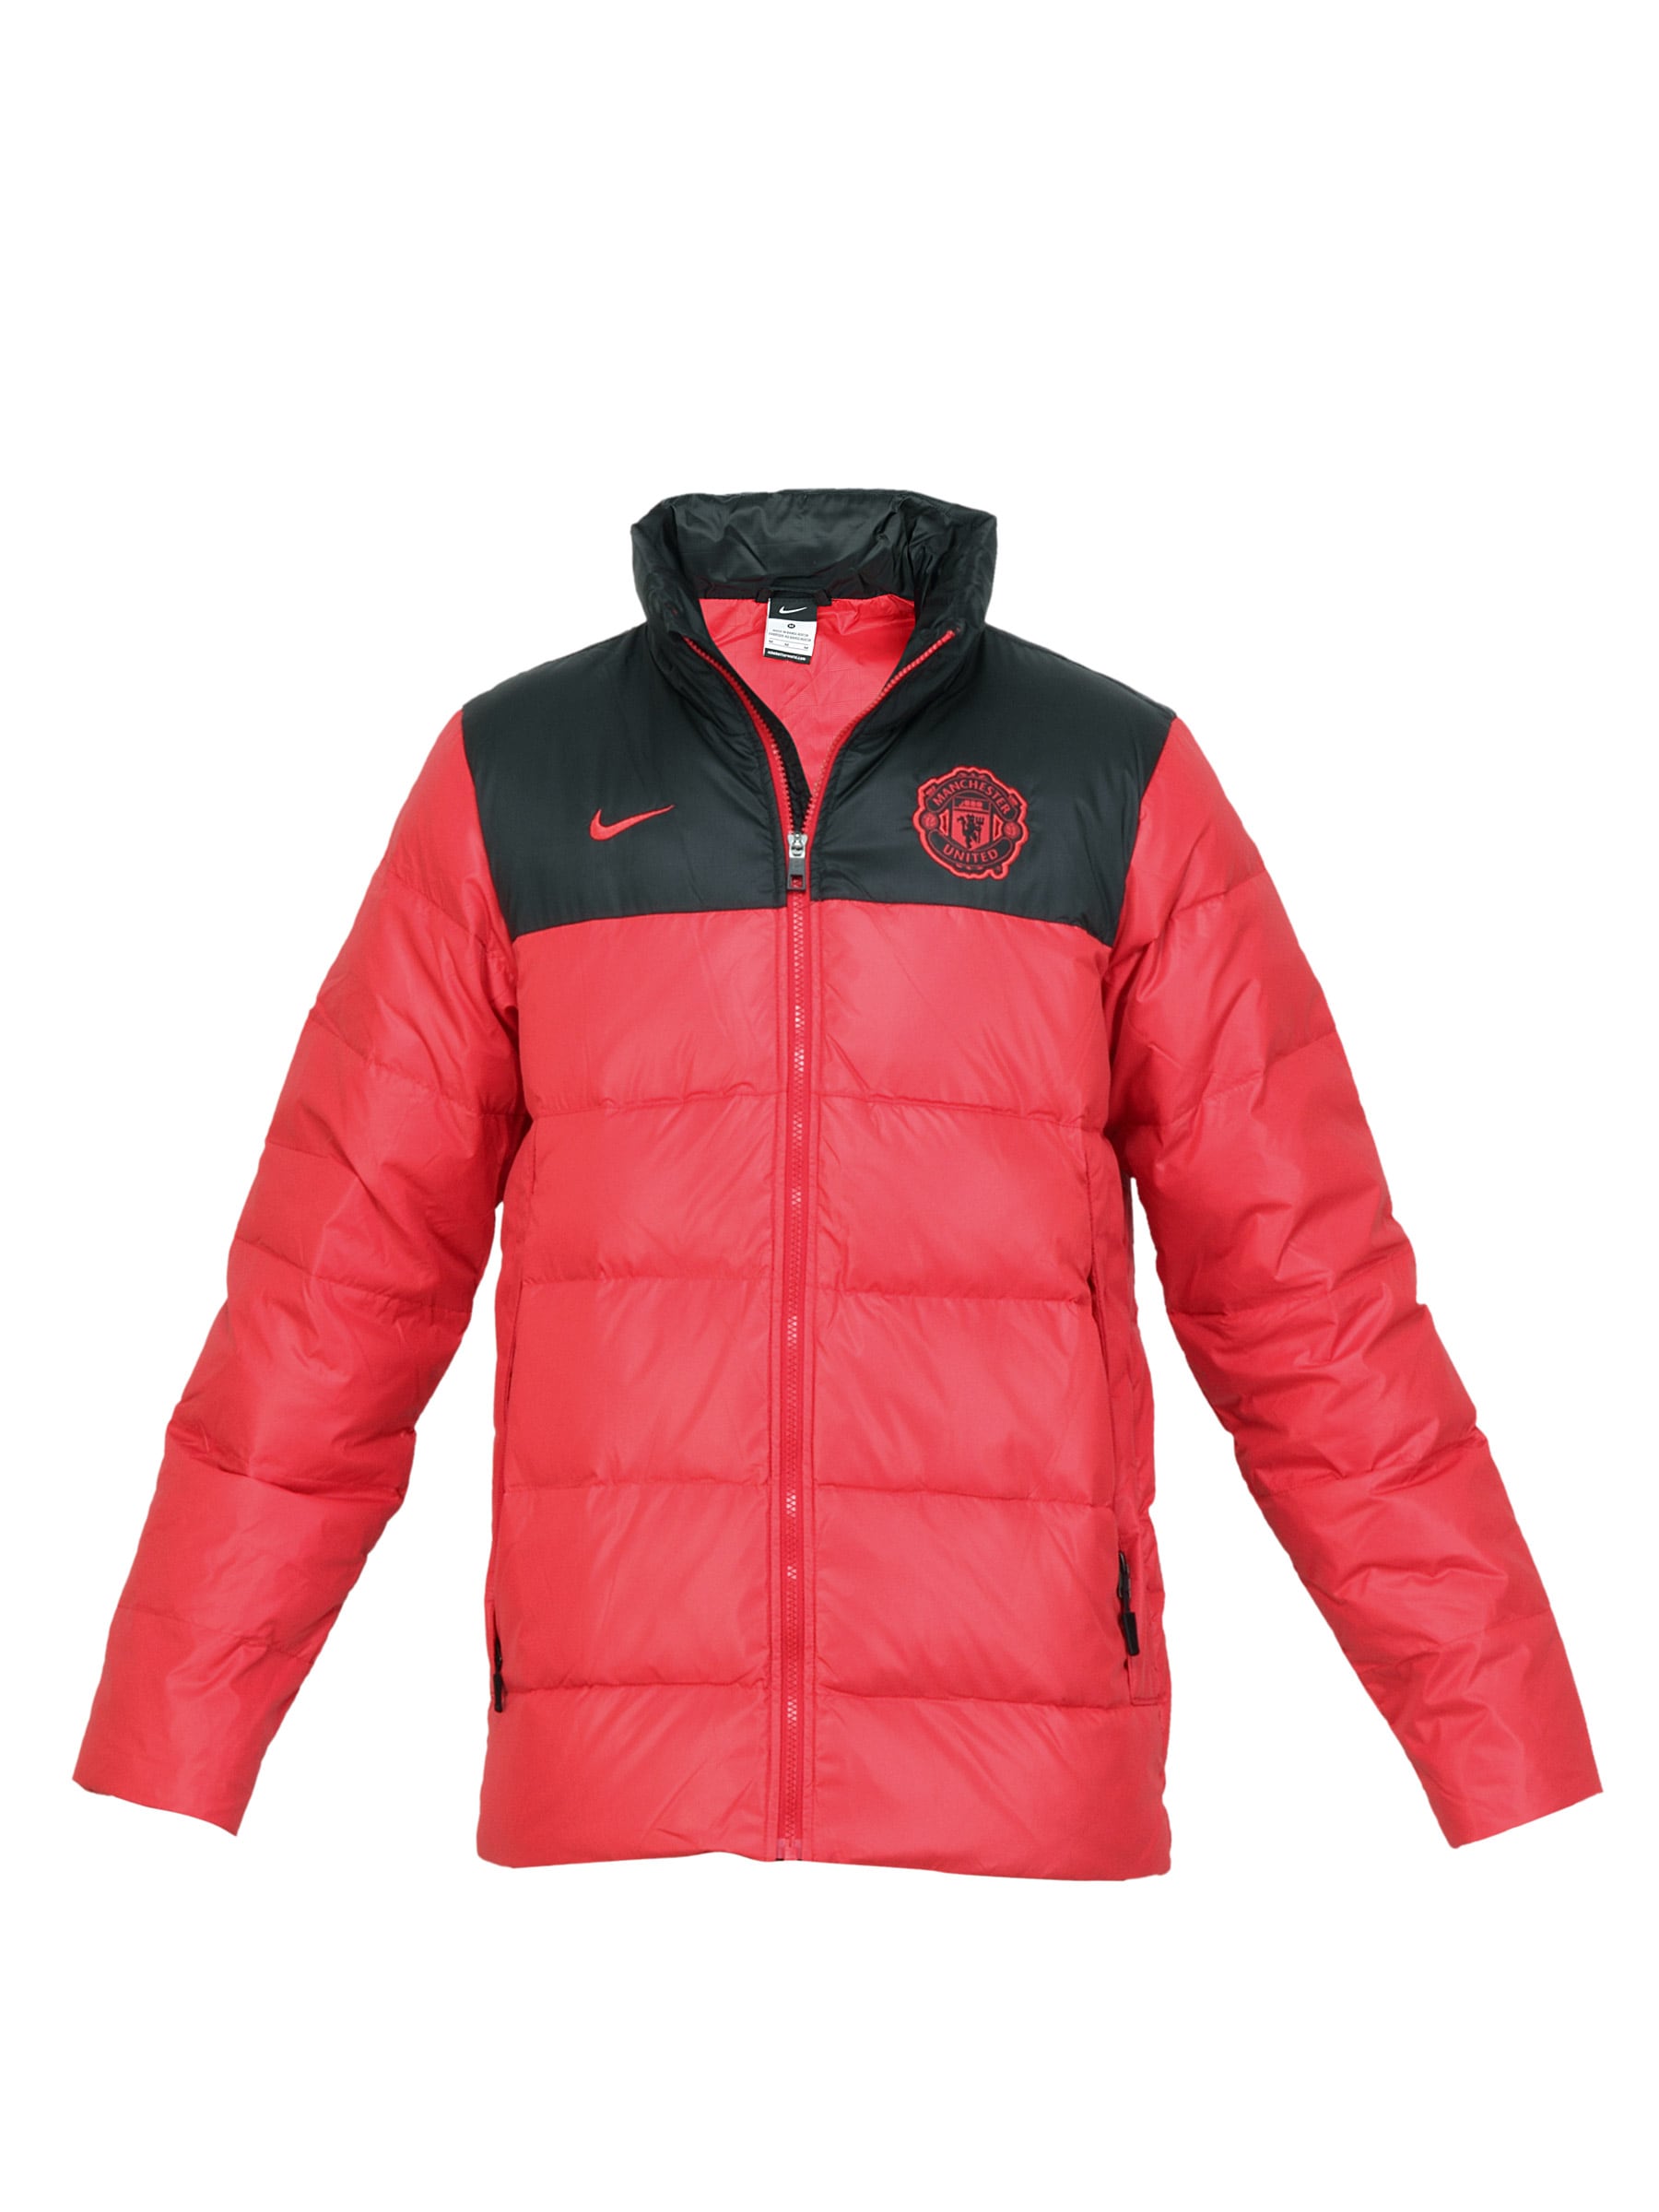 Nike Men Football Soccer Red Jacket